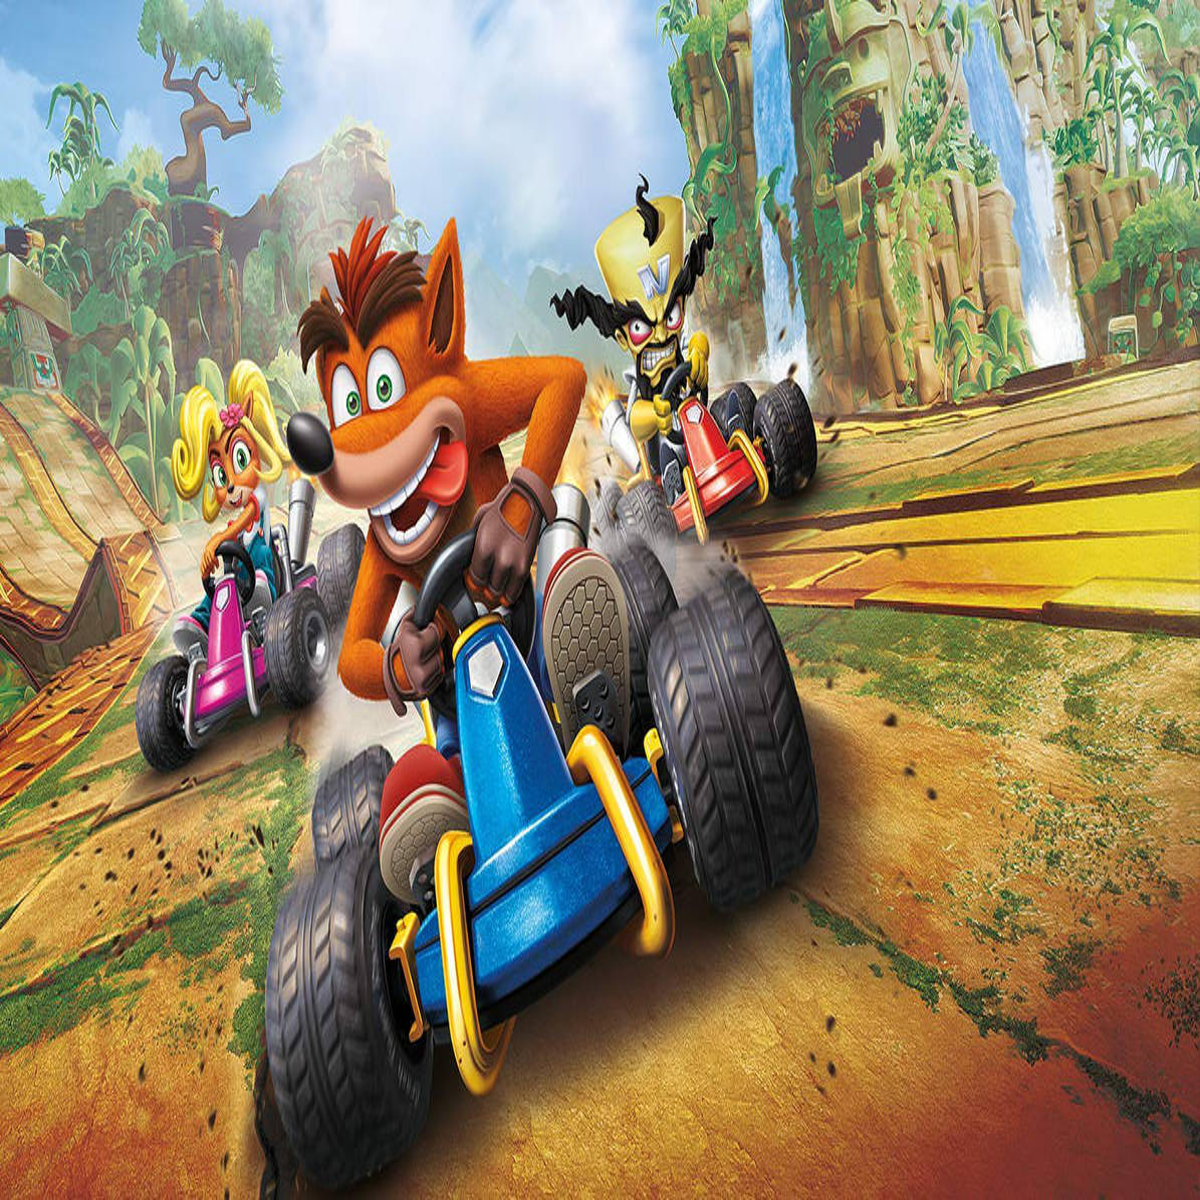 Team Sonic Racing - Nintendo Switch Código Eshop